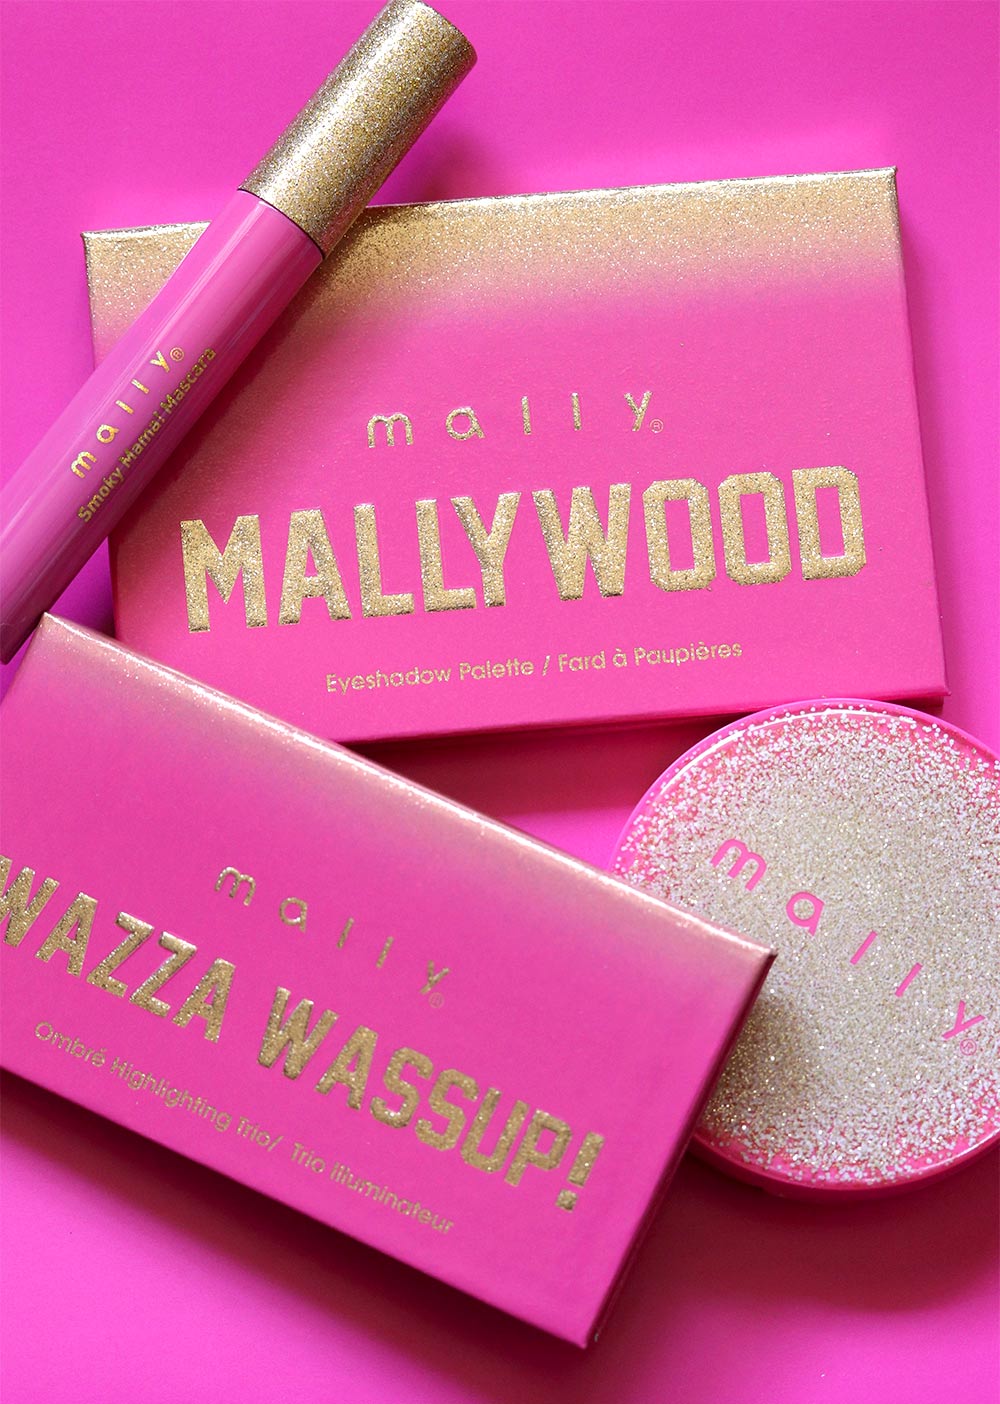 mallywood highlighting blush